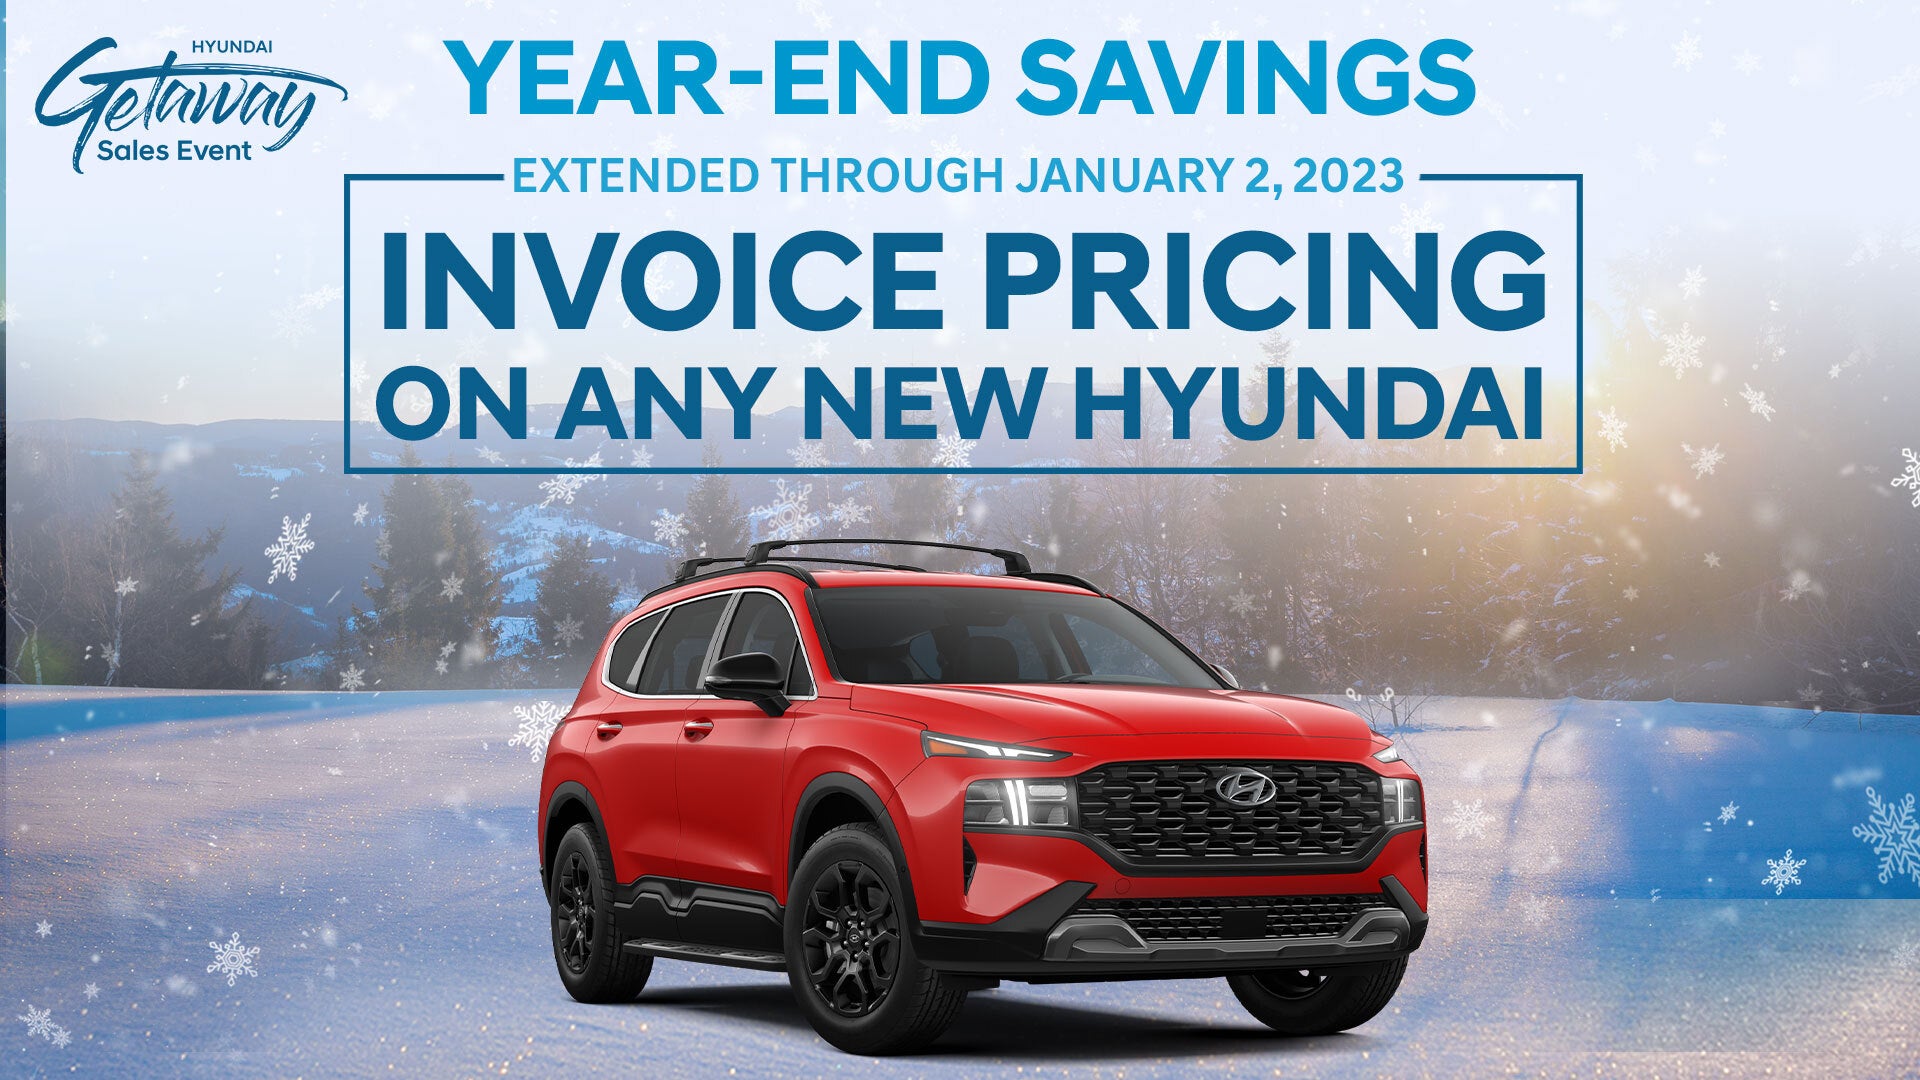 Invoice pricing on any new Hyundai